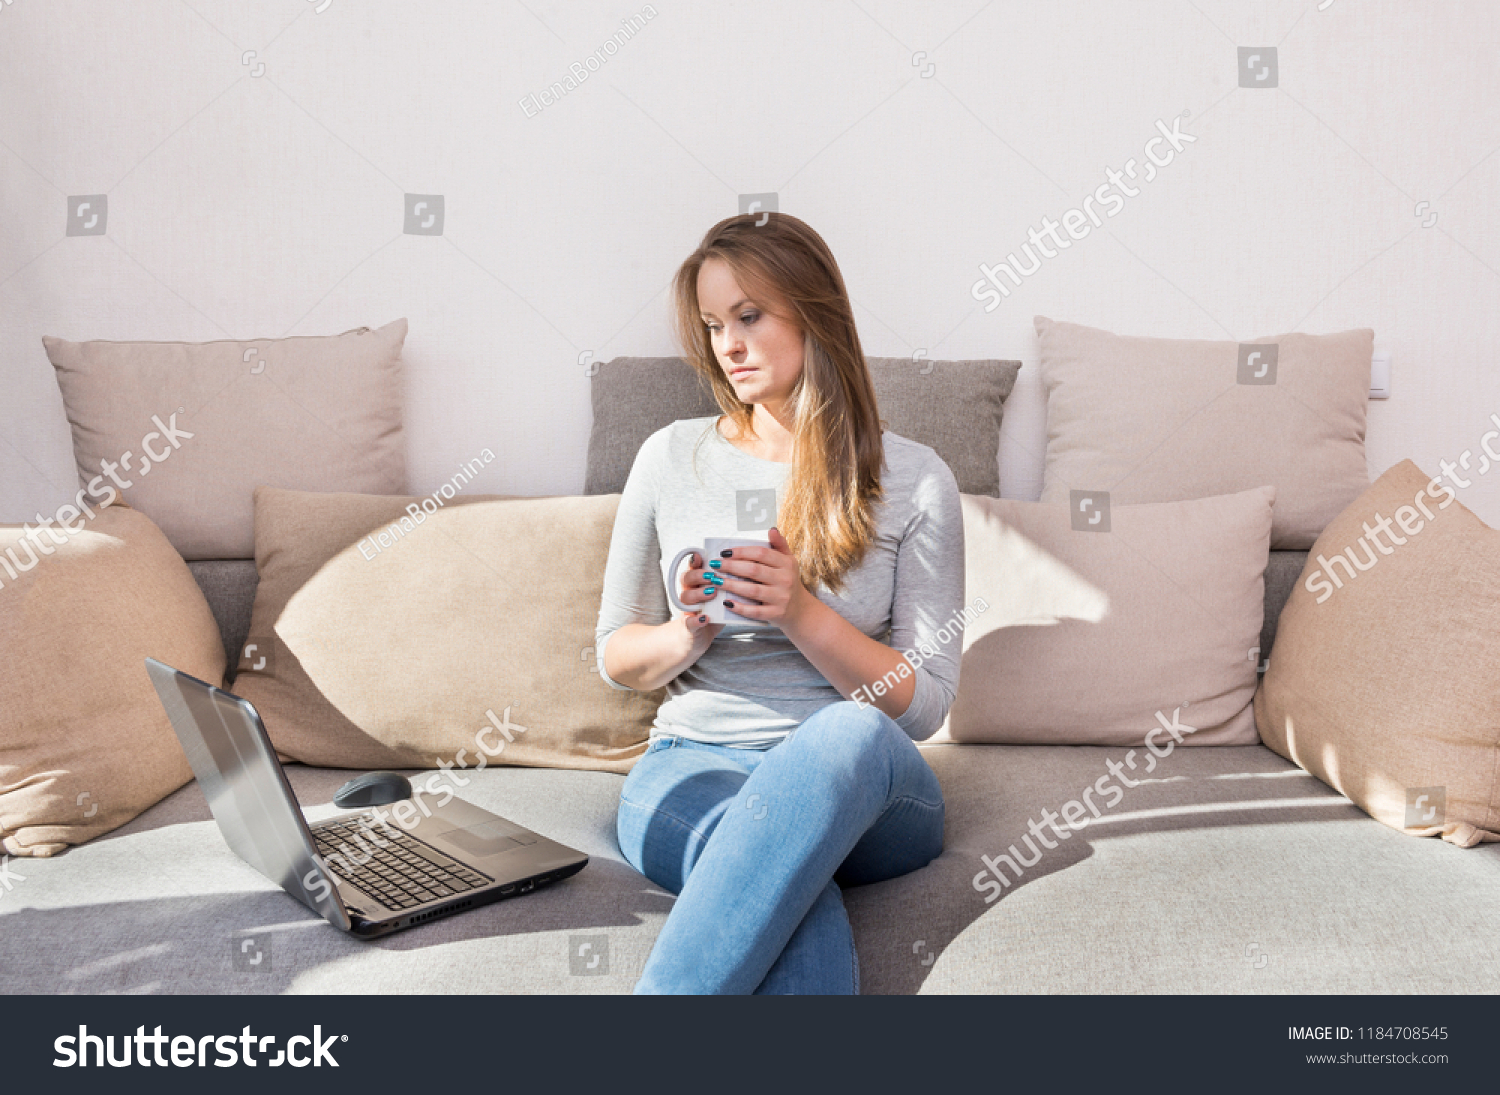 Девушка в джинсах на диване